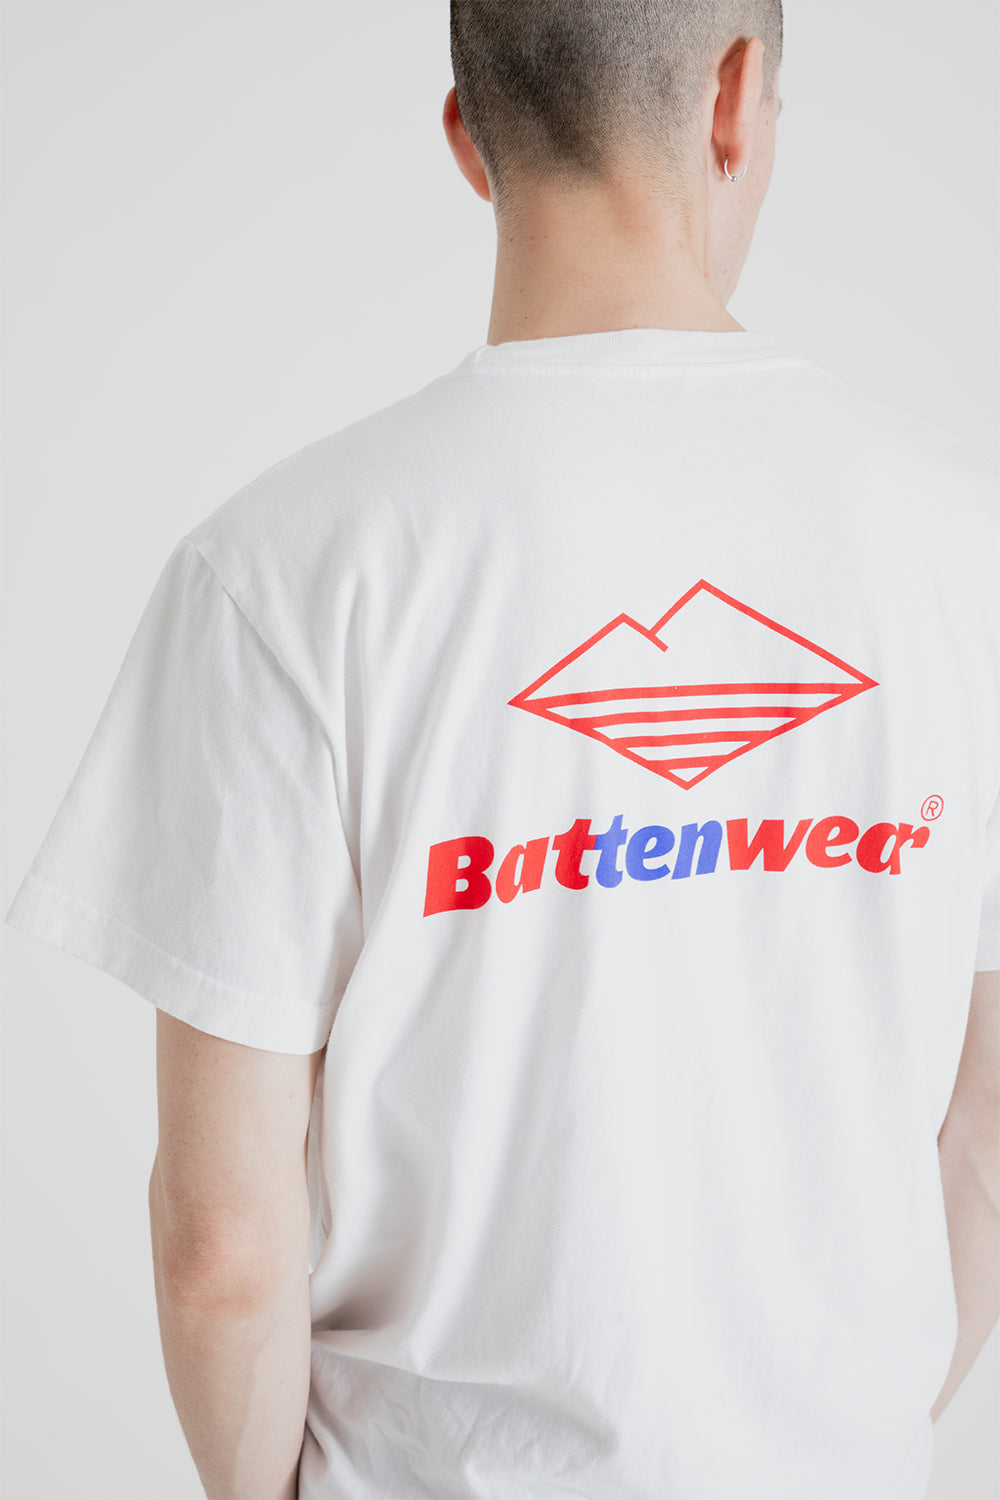 Battenwear 10th Anniversary Team S/S Pocket Tee in White